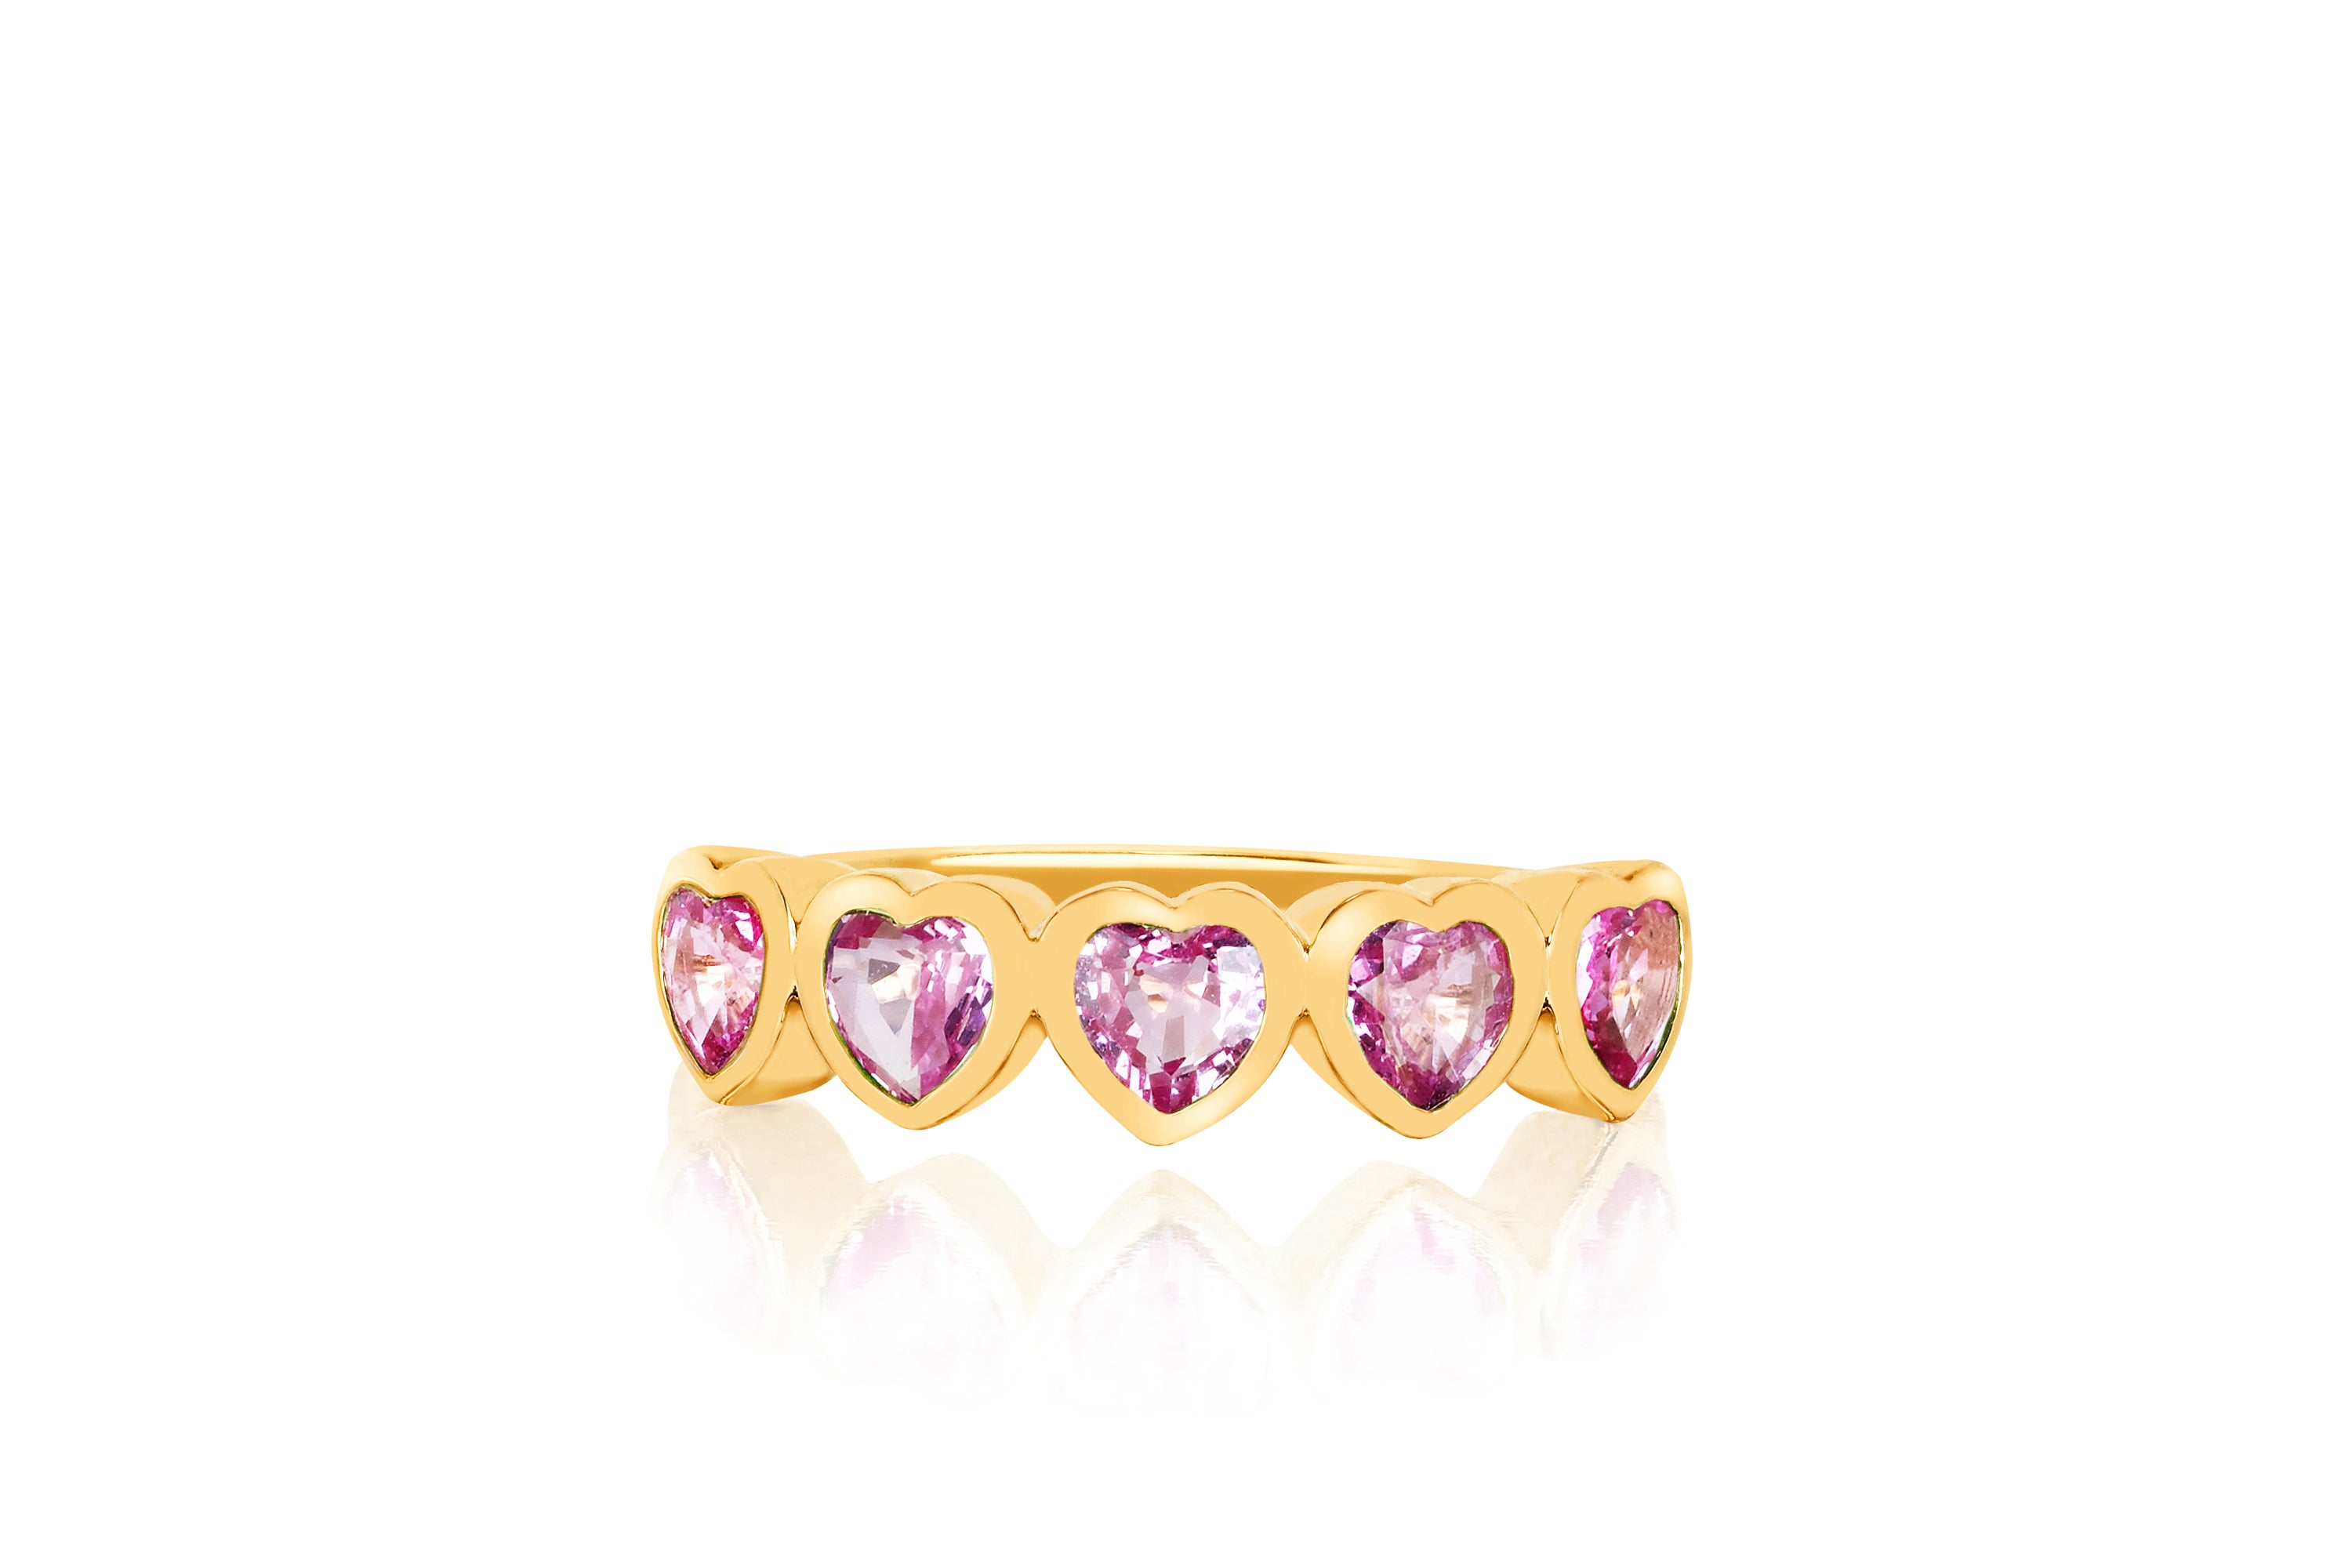 Vintage Golden Heart Rings Set For Women Fashion Pink Green Color